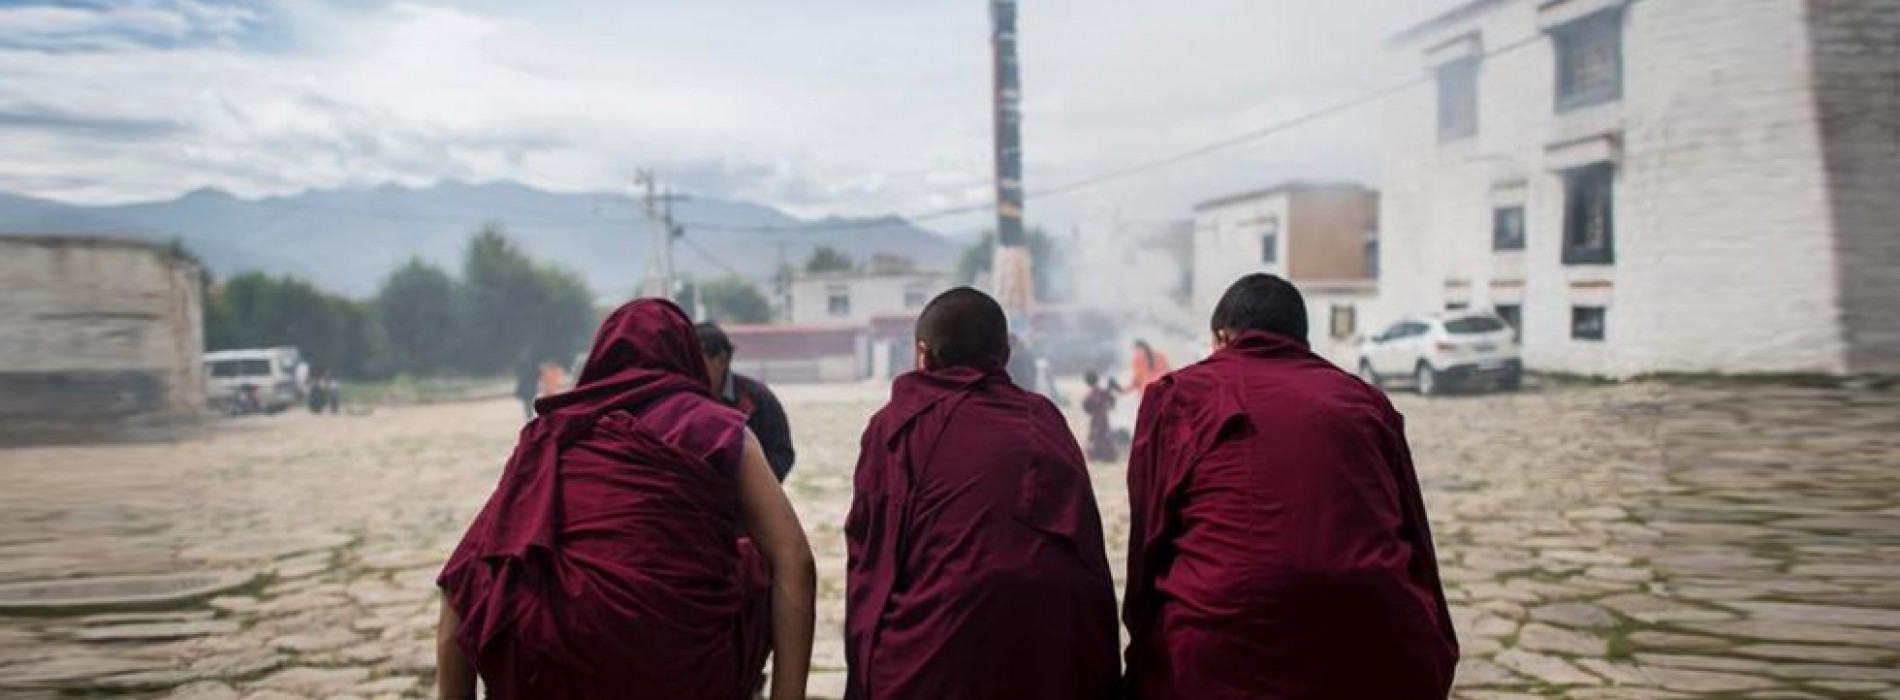 China blocks Tibetans’ visit to India: Sources